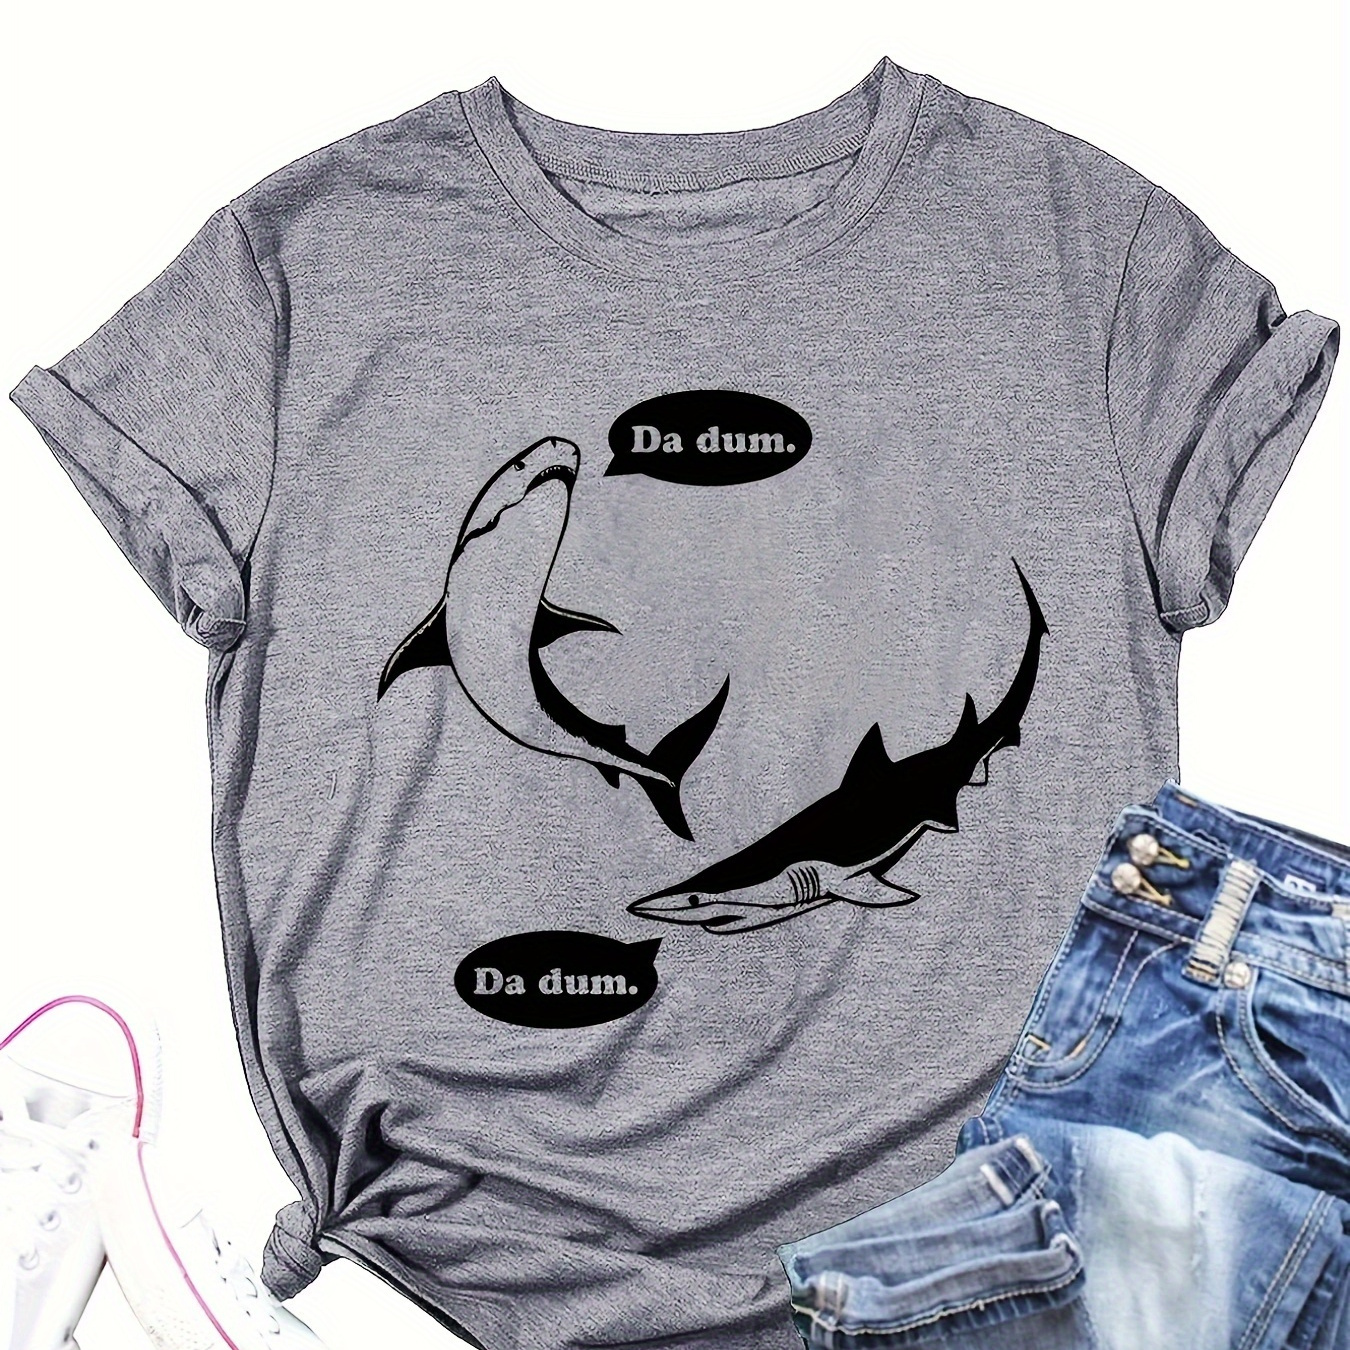 

Shark Print Crew Neck T-shirt, Casual Short Sleeve Top For Spring & Summer, Women's Clothing